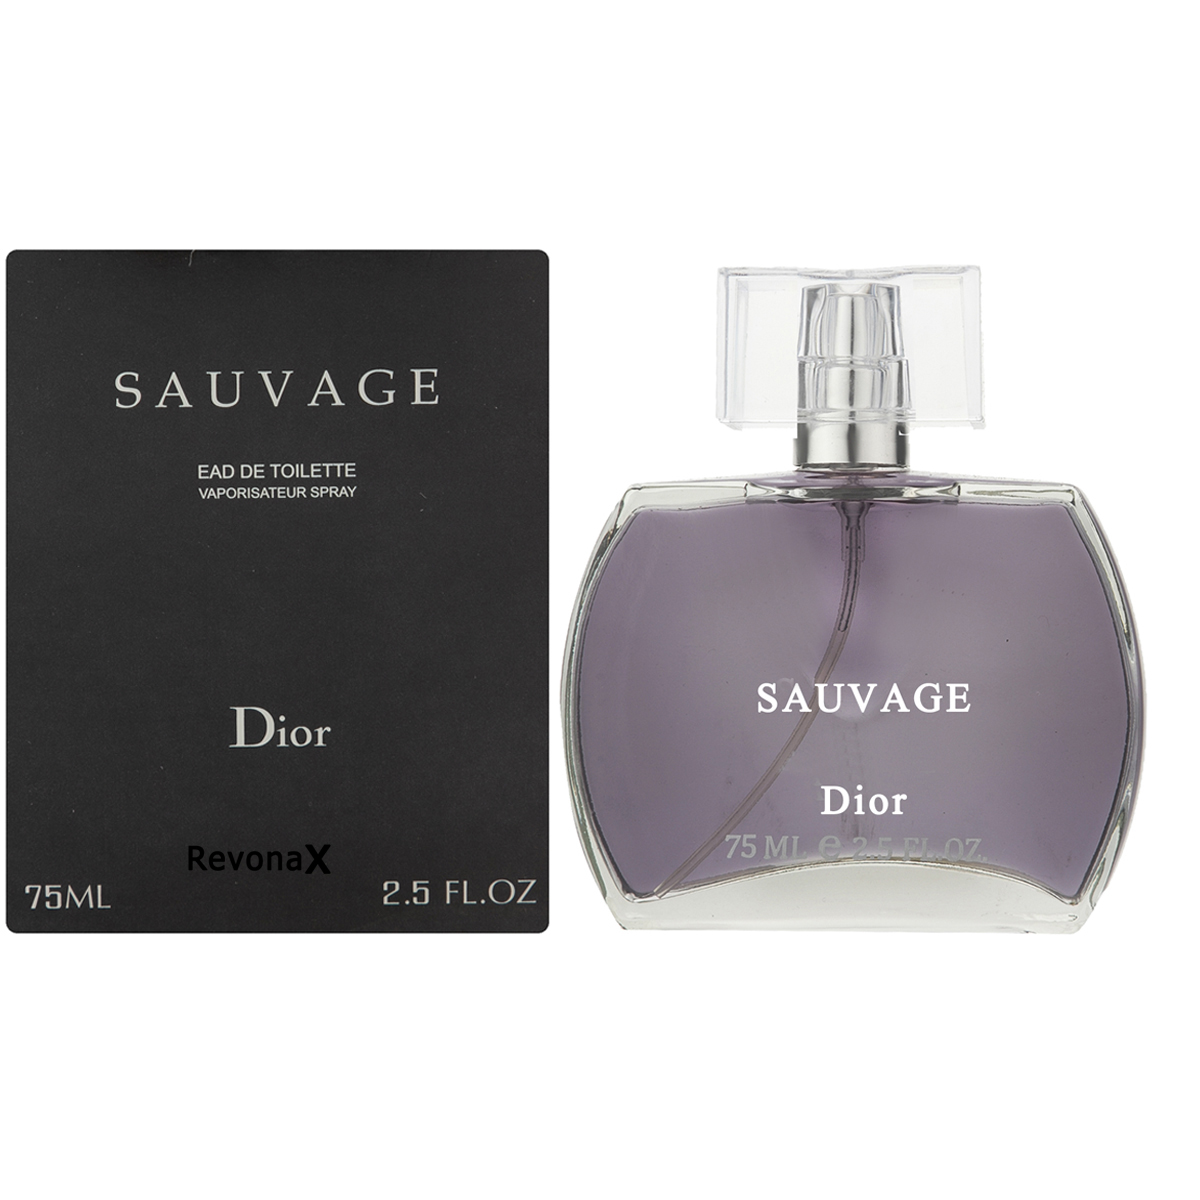 ادو تویلت مردانه رووناکس مدل SAUVAGE Dior حجم 75 میلی لیتر